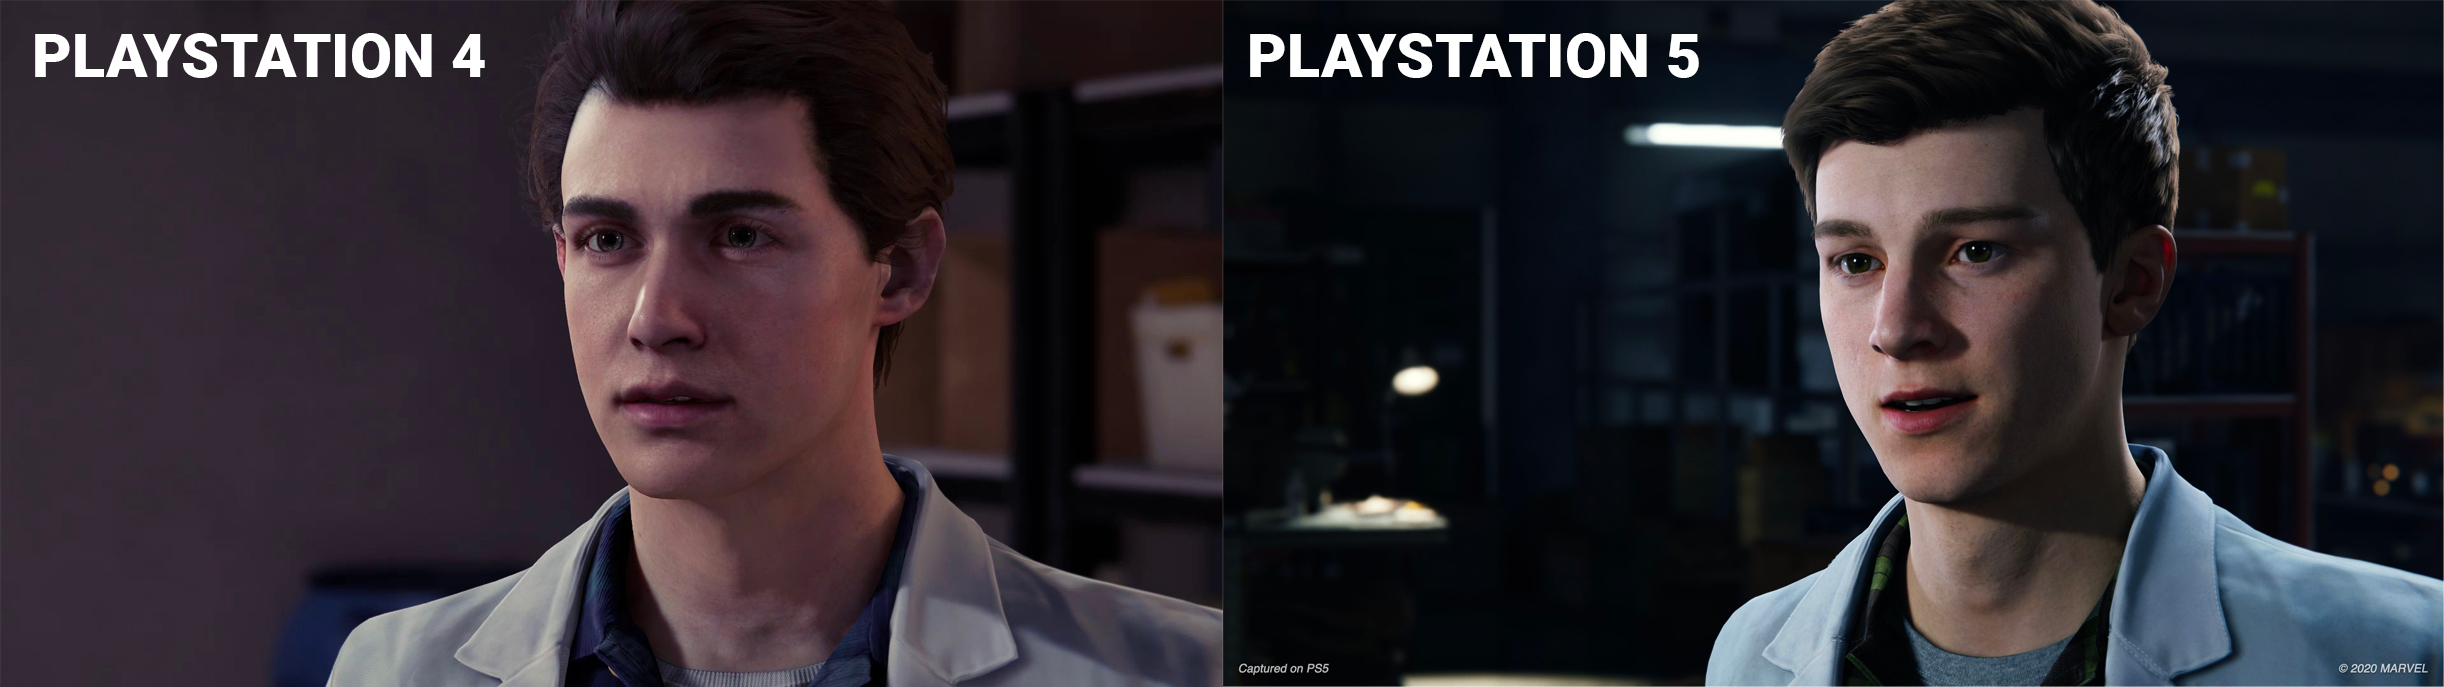 Peter Parker - PS4 vs PS5